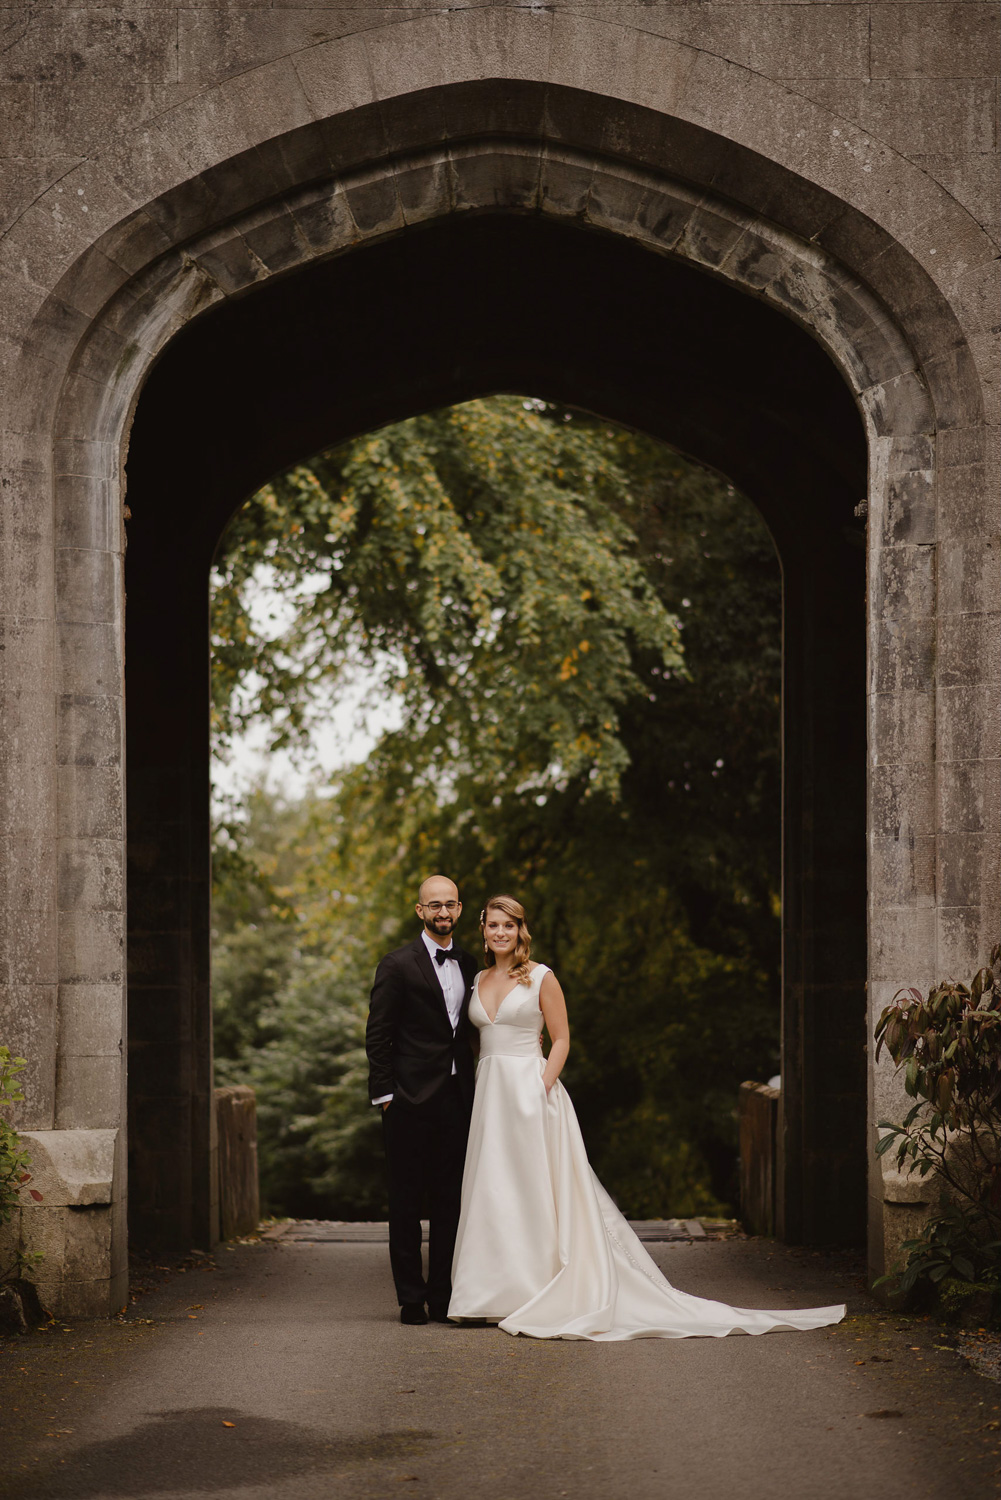 Markree castle wedding photographs -44.jpg